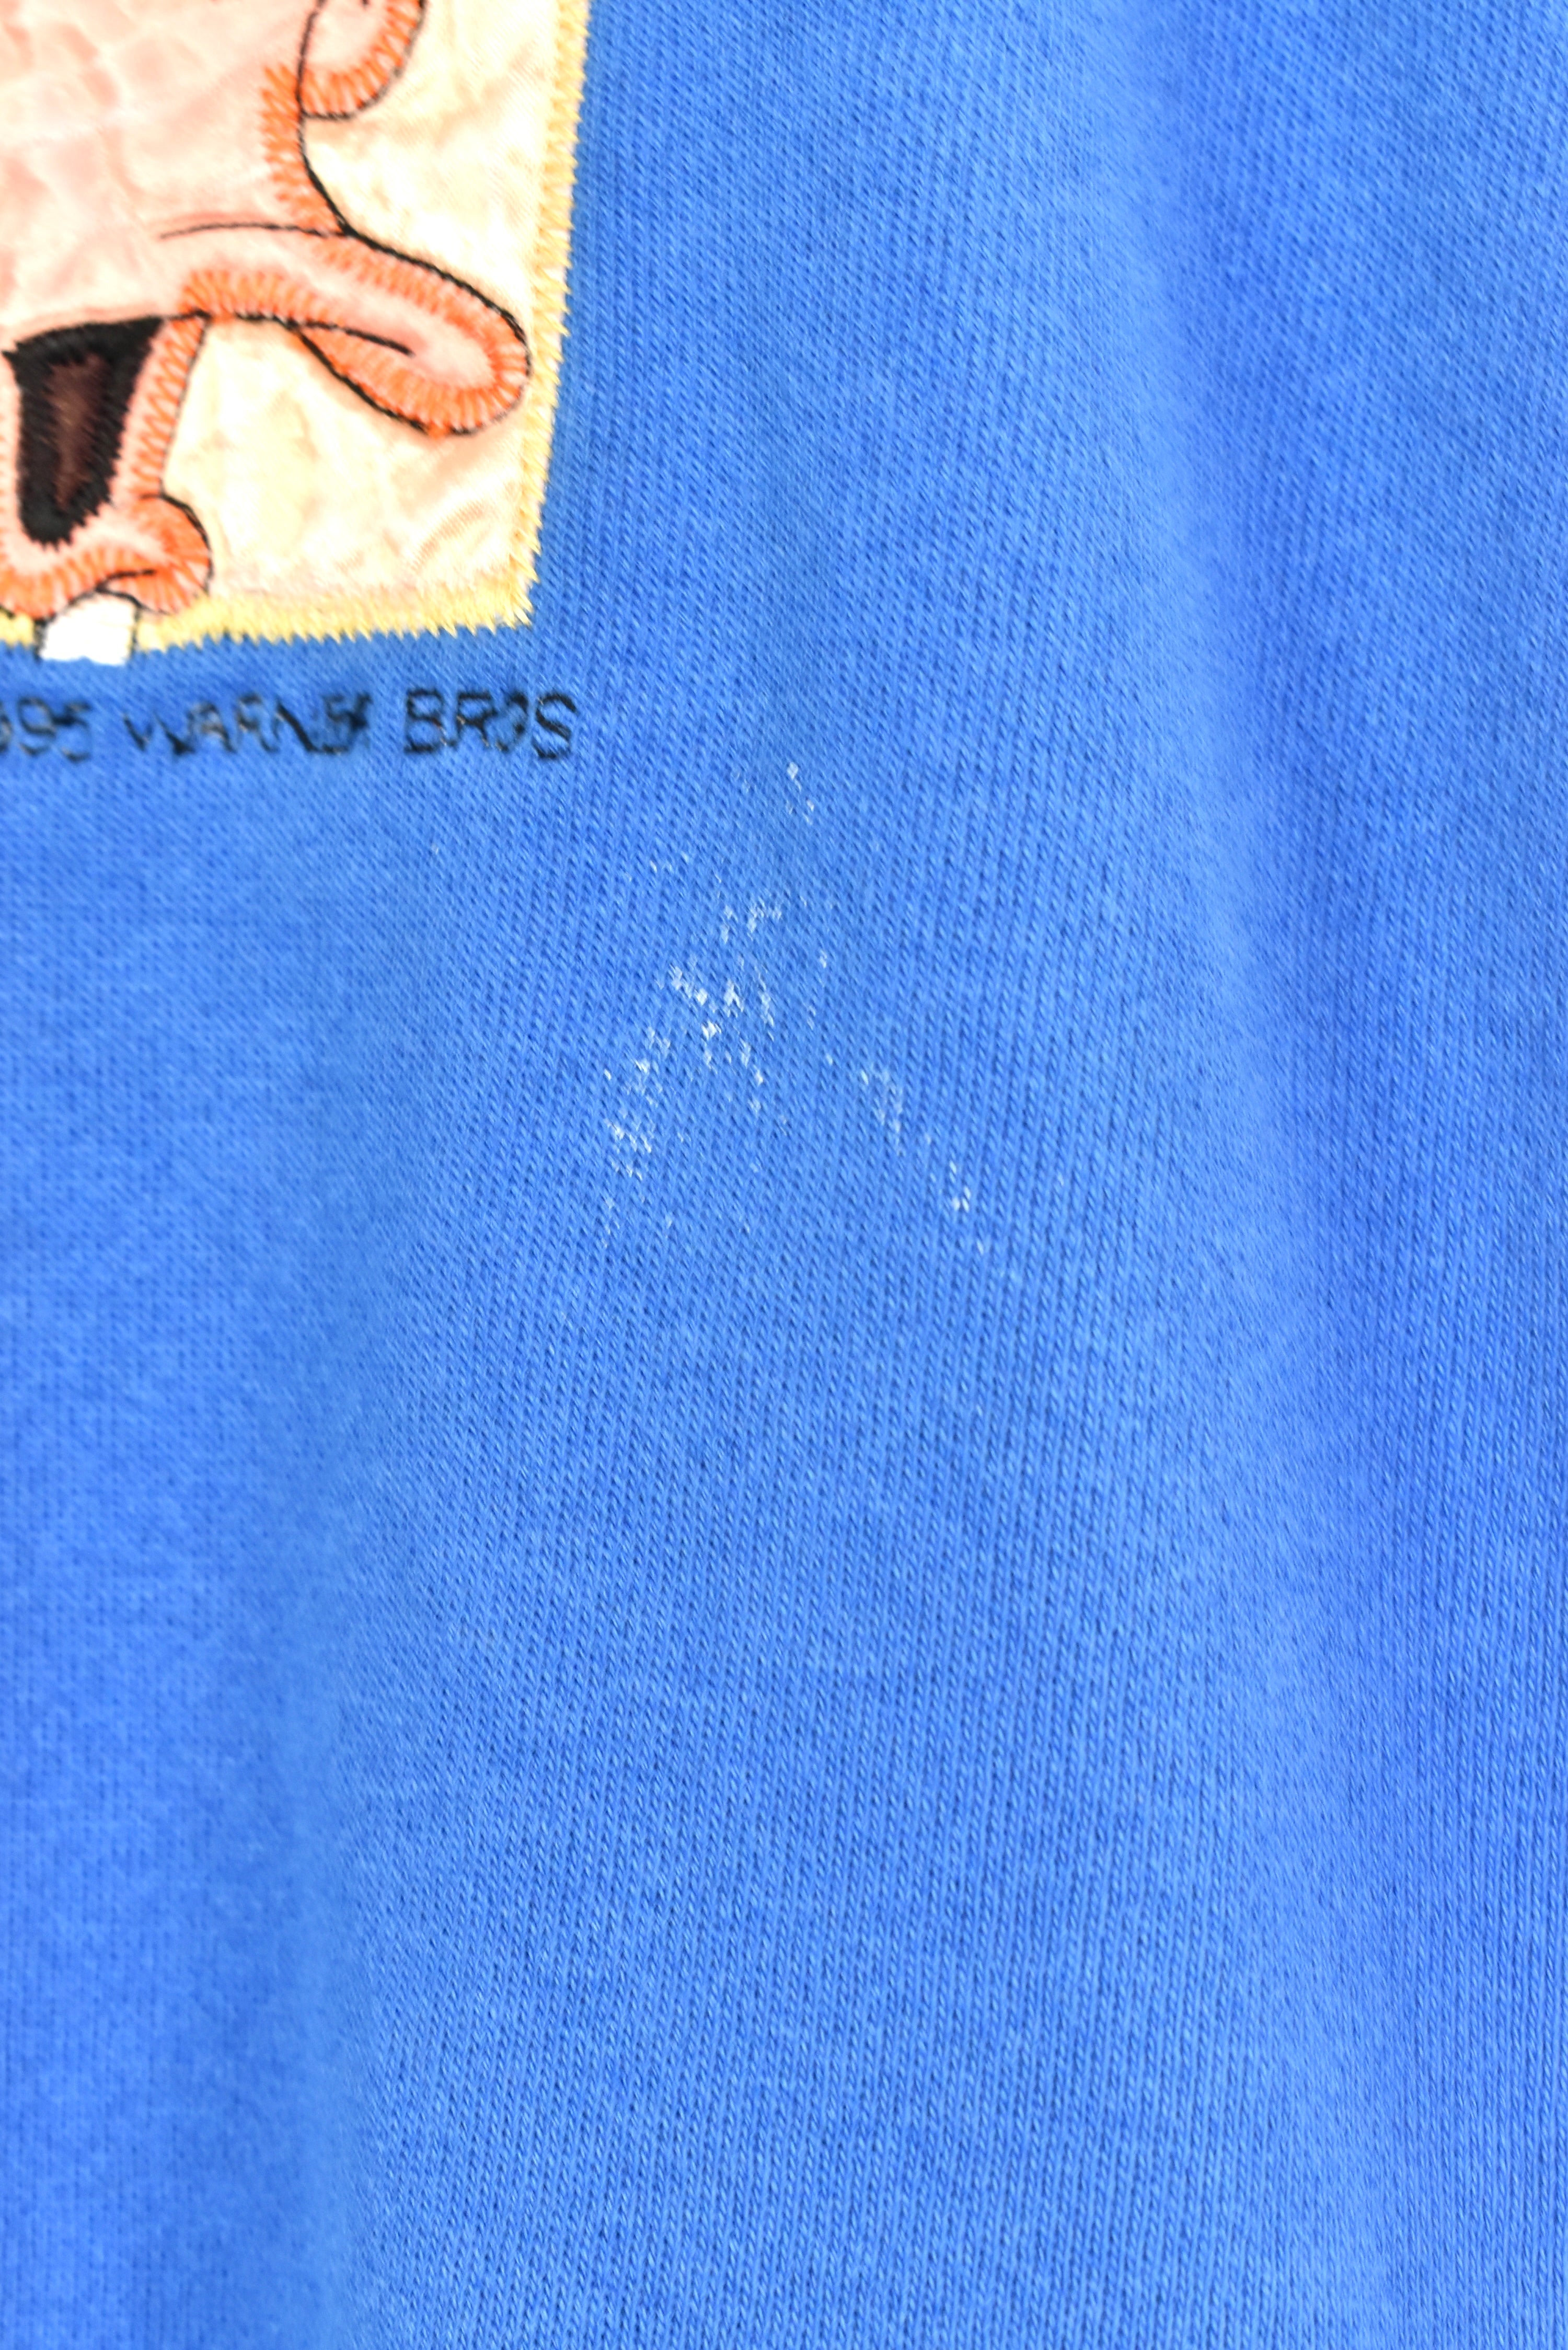 Vintage Daffy Duck sweatshirt, 1995 Warner Bros embroidered crewneck - large, blue DISNEY / CARTOON